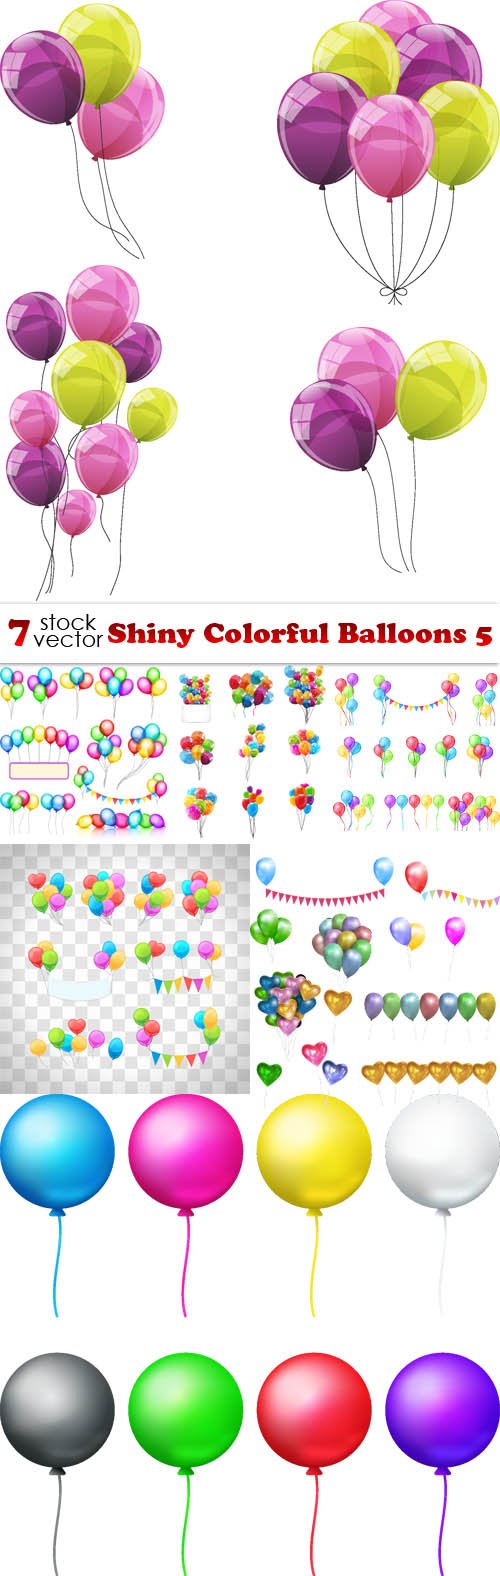 Vectors - Shiny Colorful Balloons 5